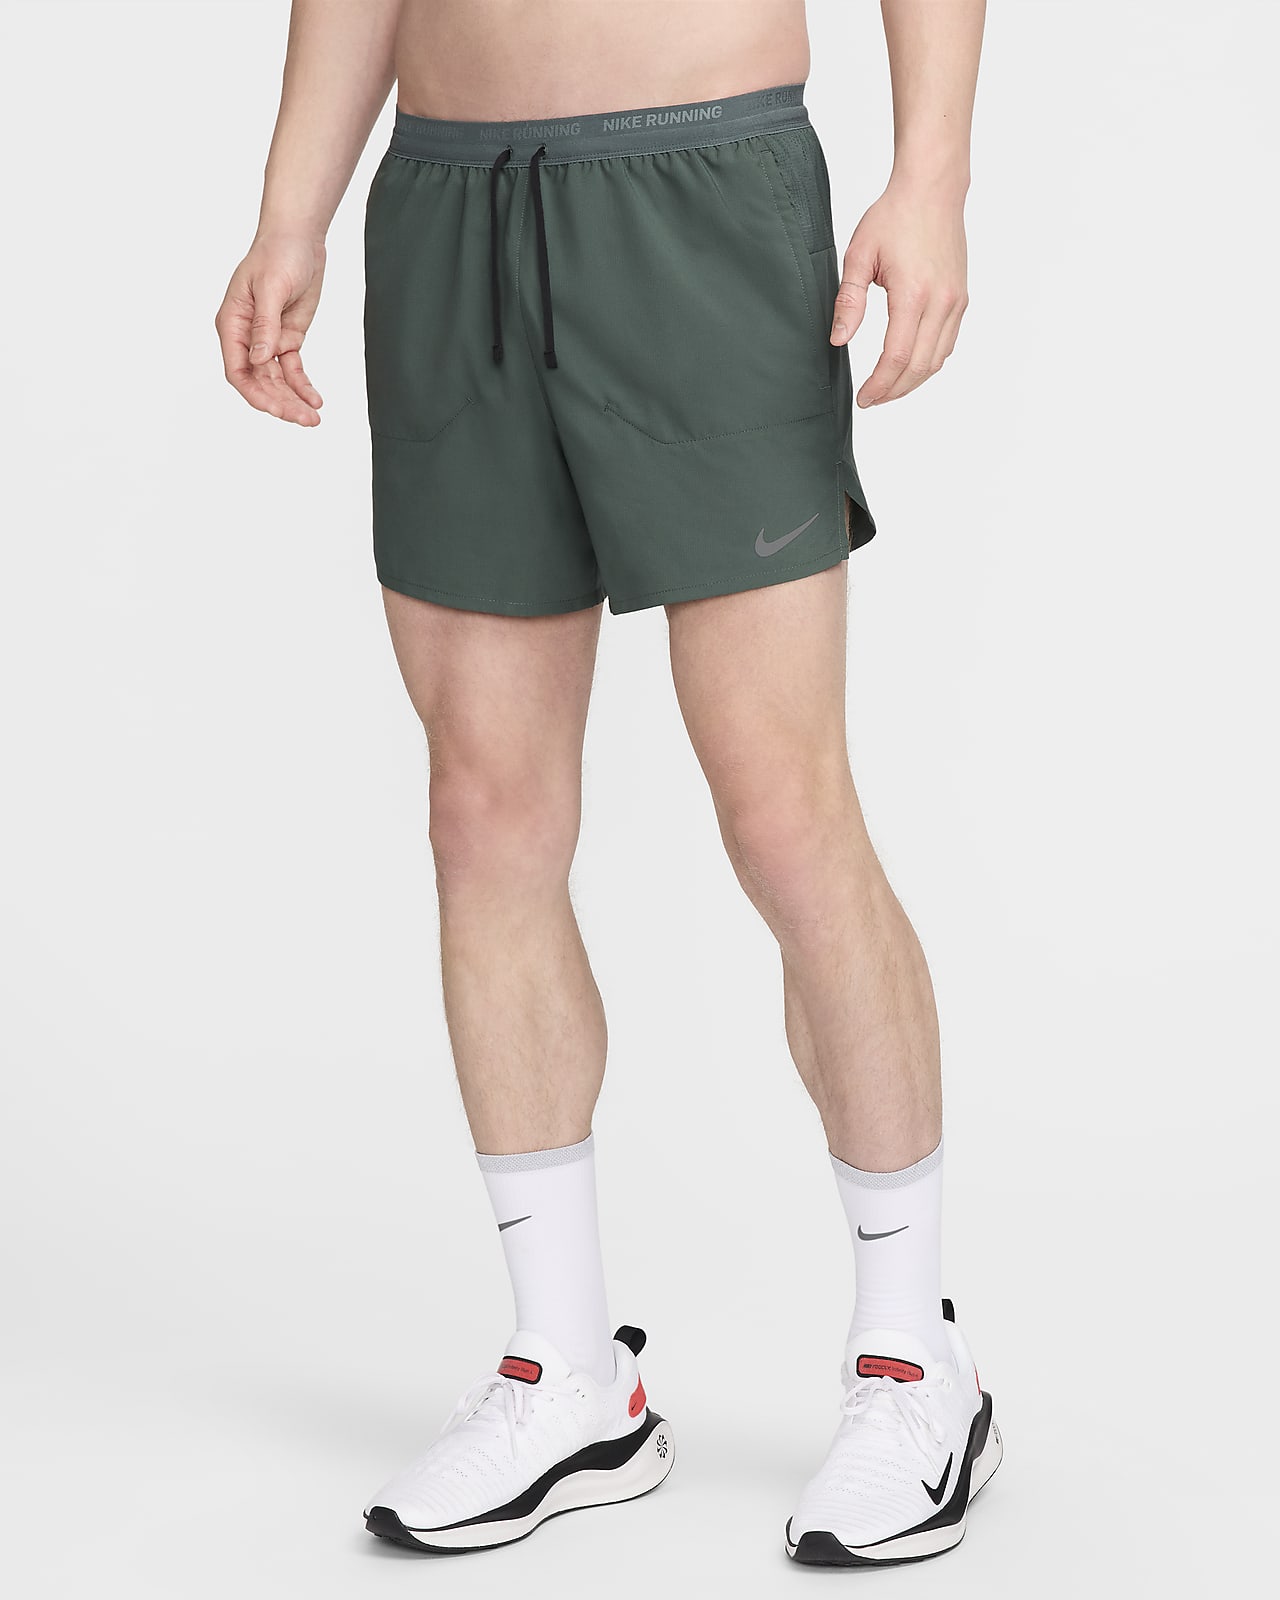 Shorts de running Dri-FIT de 13 cm 2 en 1 para hombre Nike Stride